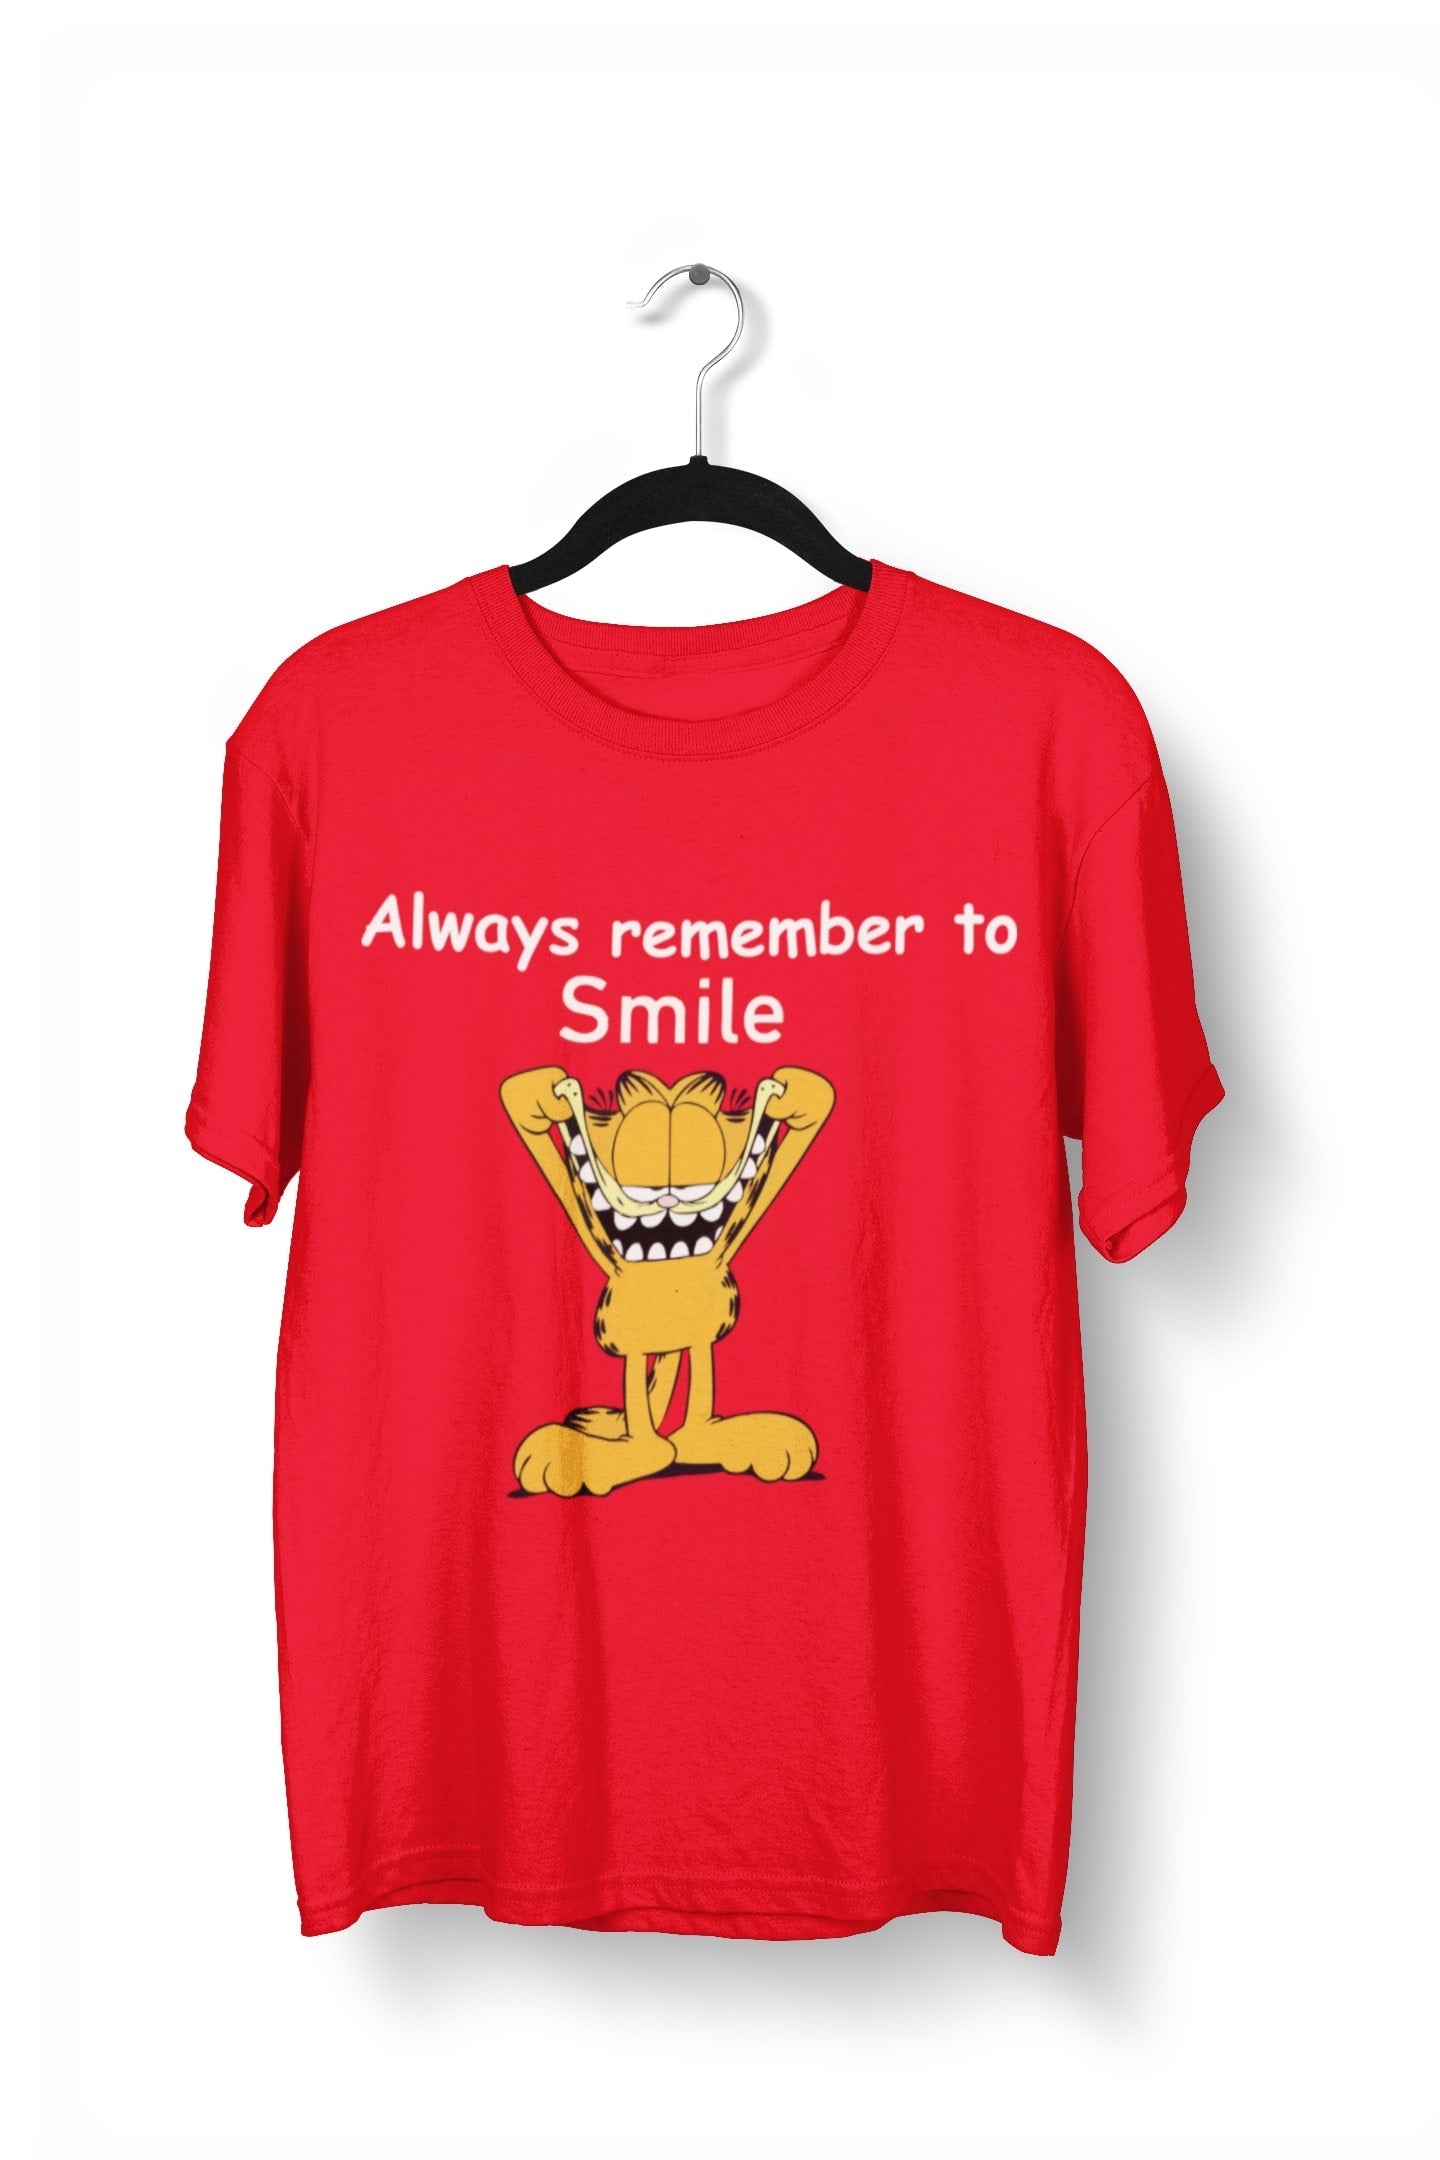 thelegalgang,Garfield - Always Remember to Smile T shirt for Men,MEN.